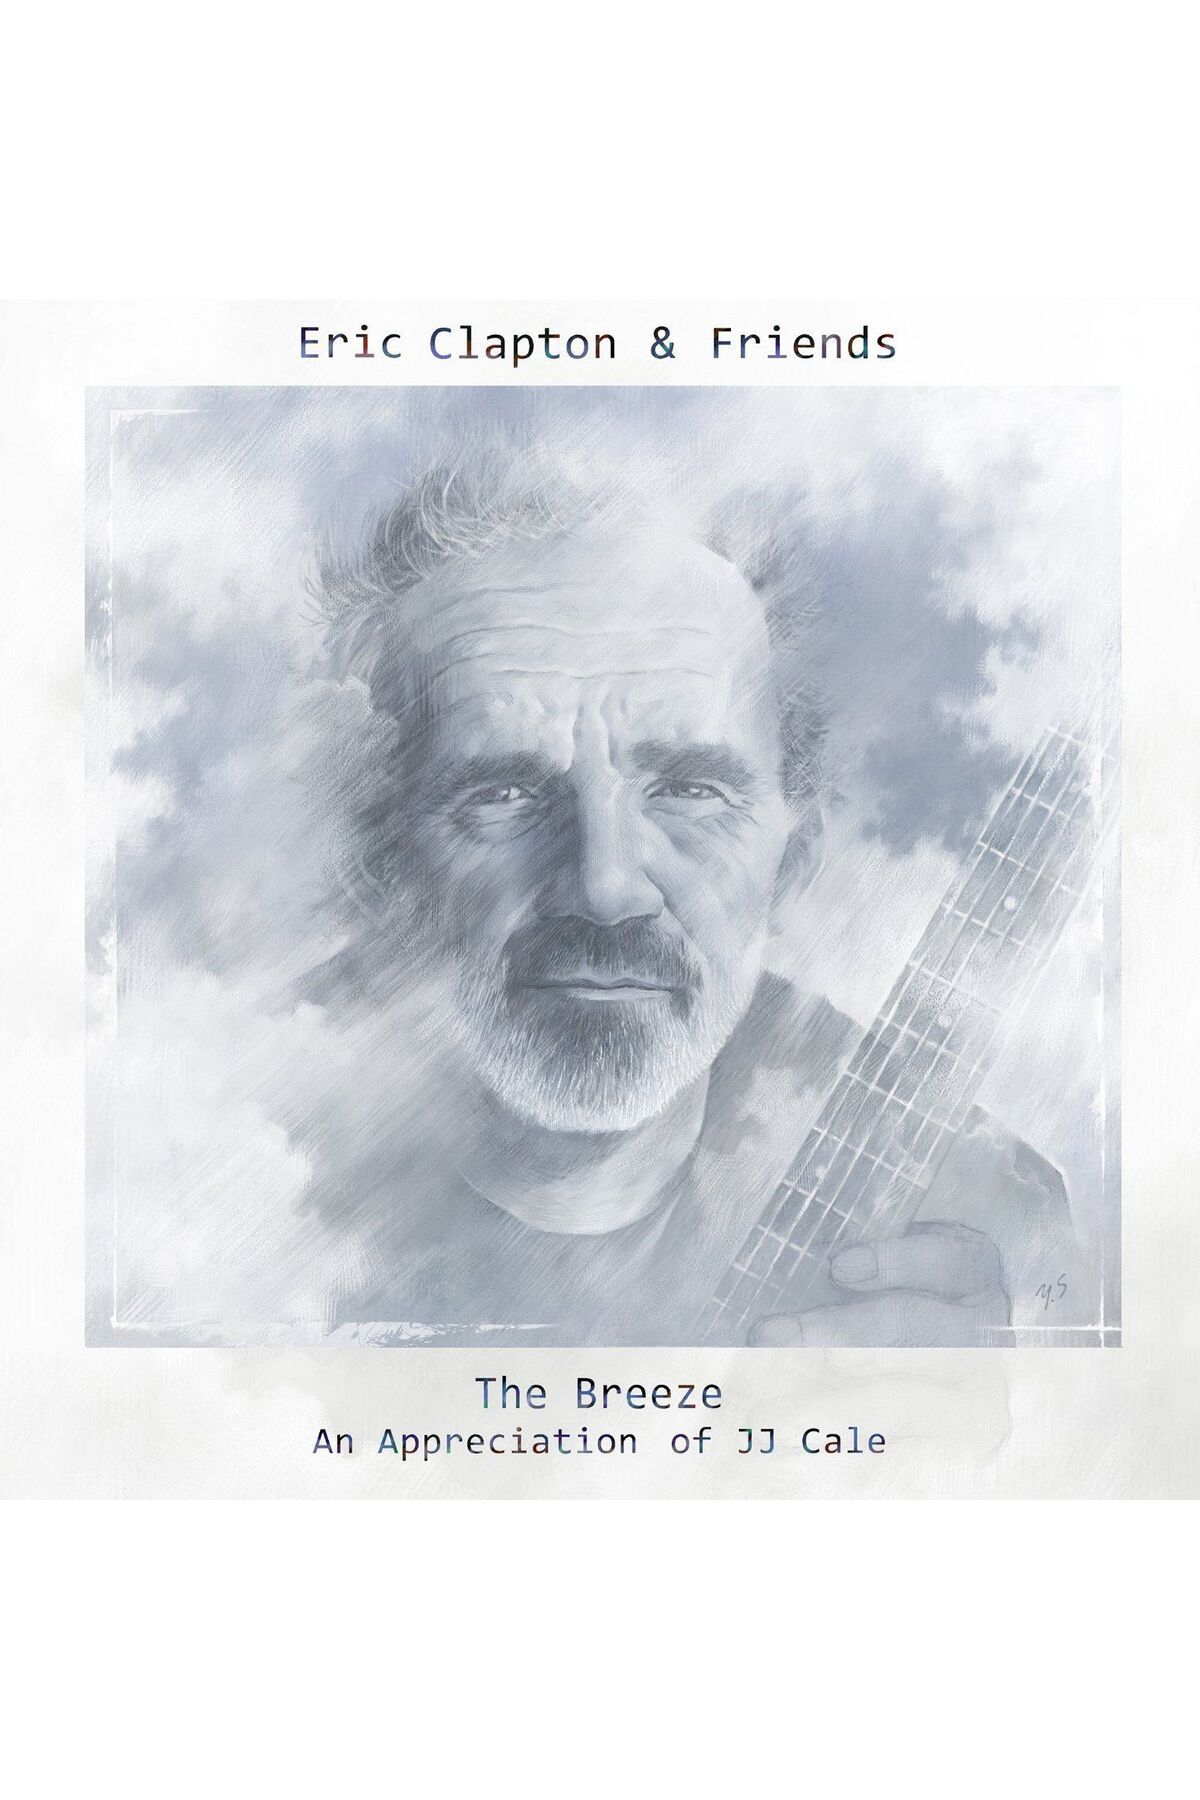 UNIVERSAL POLYDOR RECORDS YABANCI PLAK - Eric Clapton & Friends / The Breeze - An Appreciation Of JJ Cale (2LP)